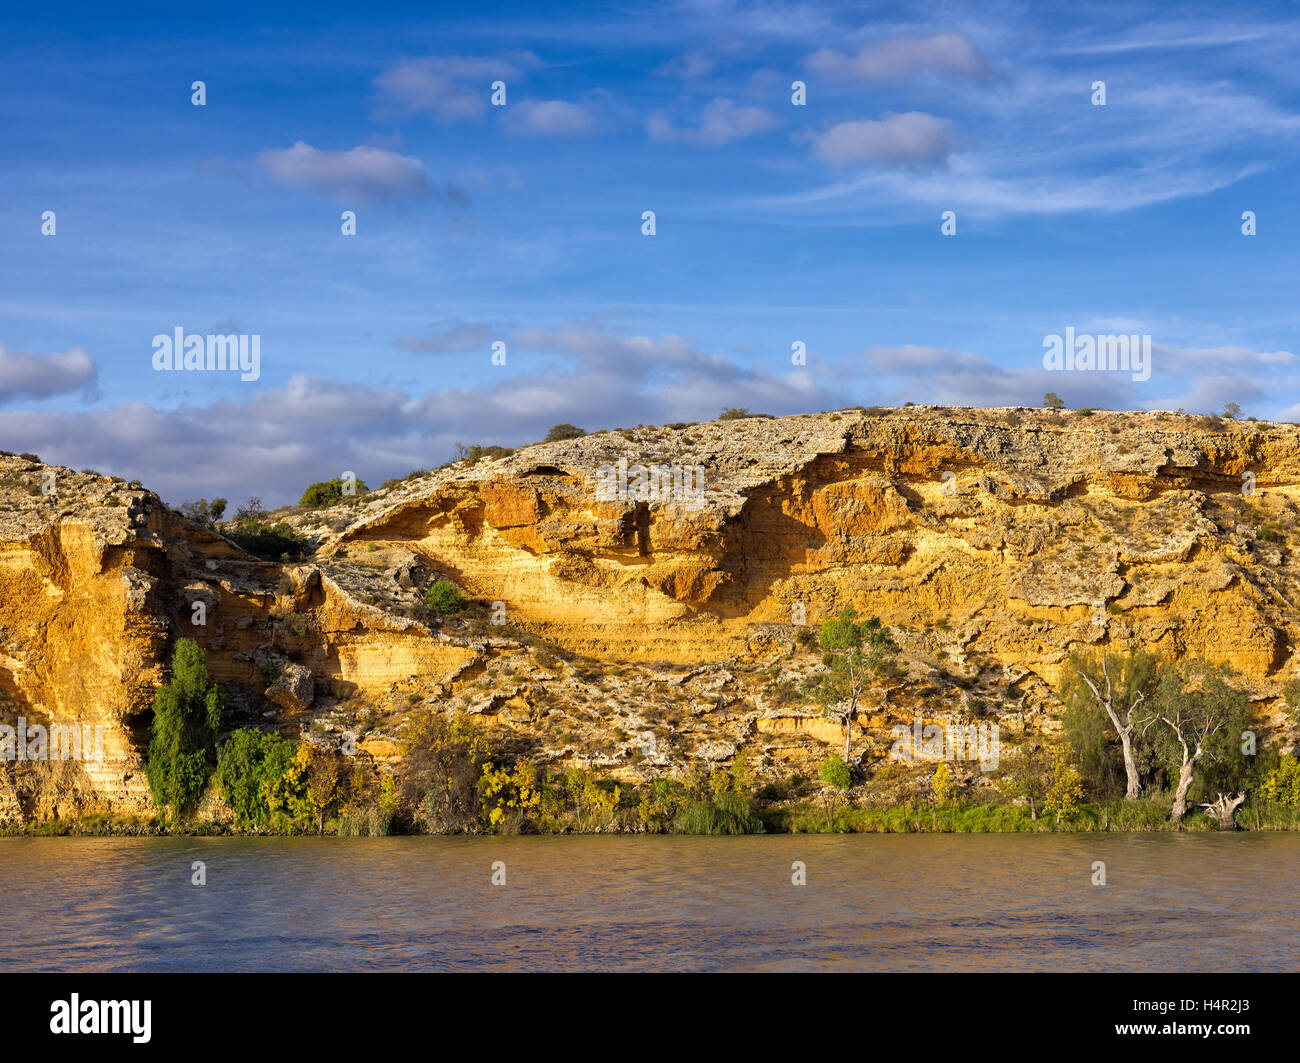 River bank, Murray River, Walker Flat South Australia Stock Photo